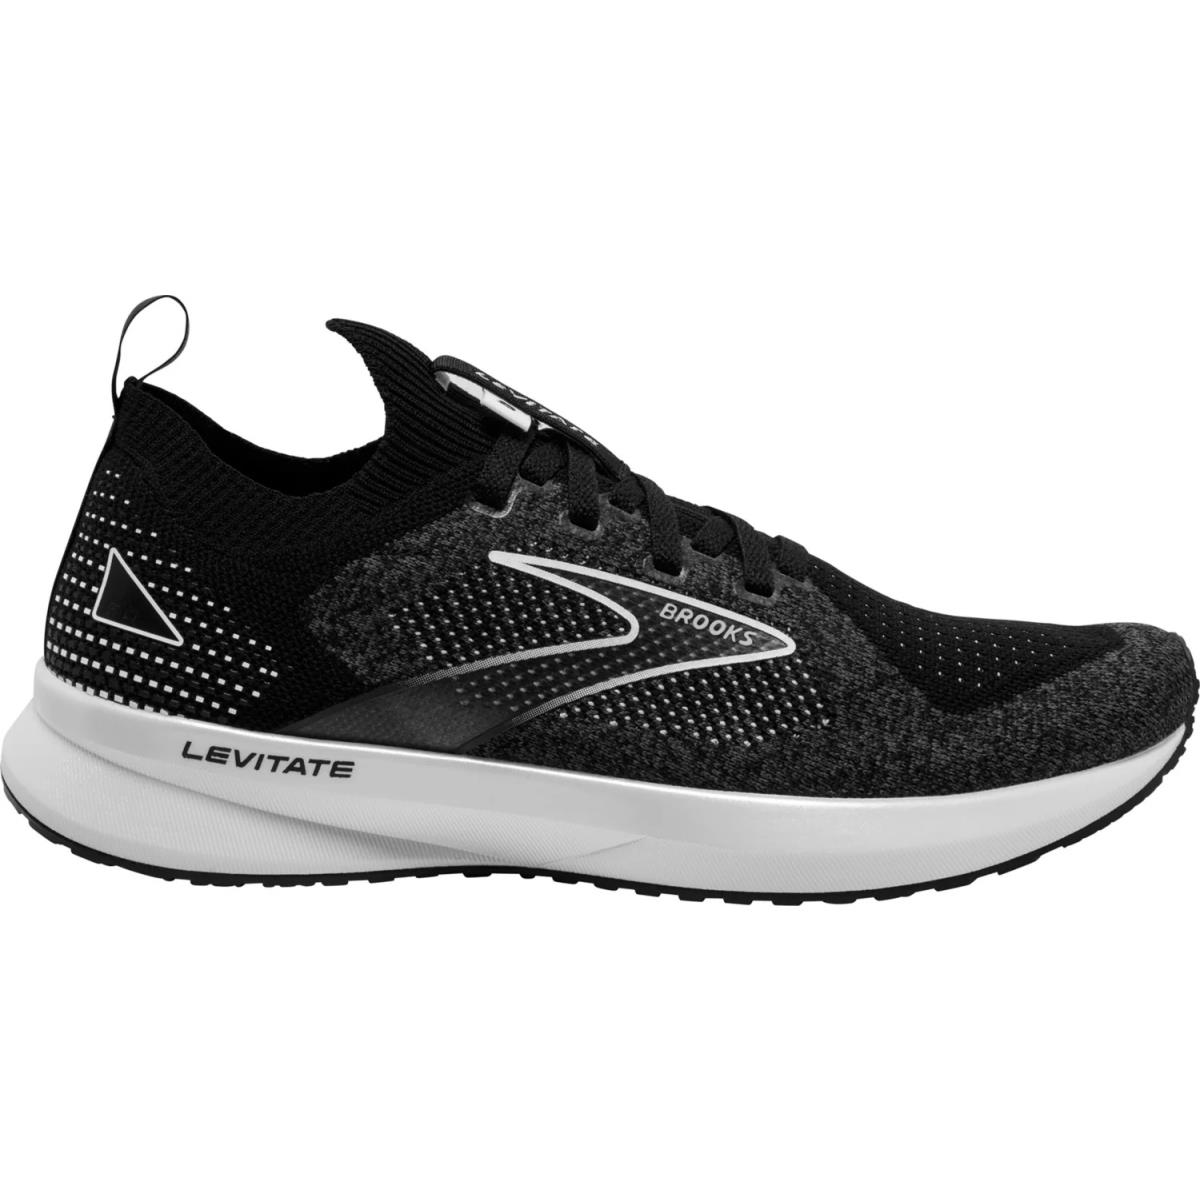 Women Brooks Levitate 5 Stealthfit 5 Running Shoes Sz 7.5 Black White 120359 1B - Black